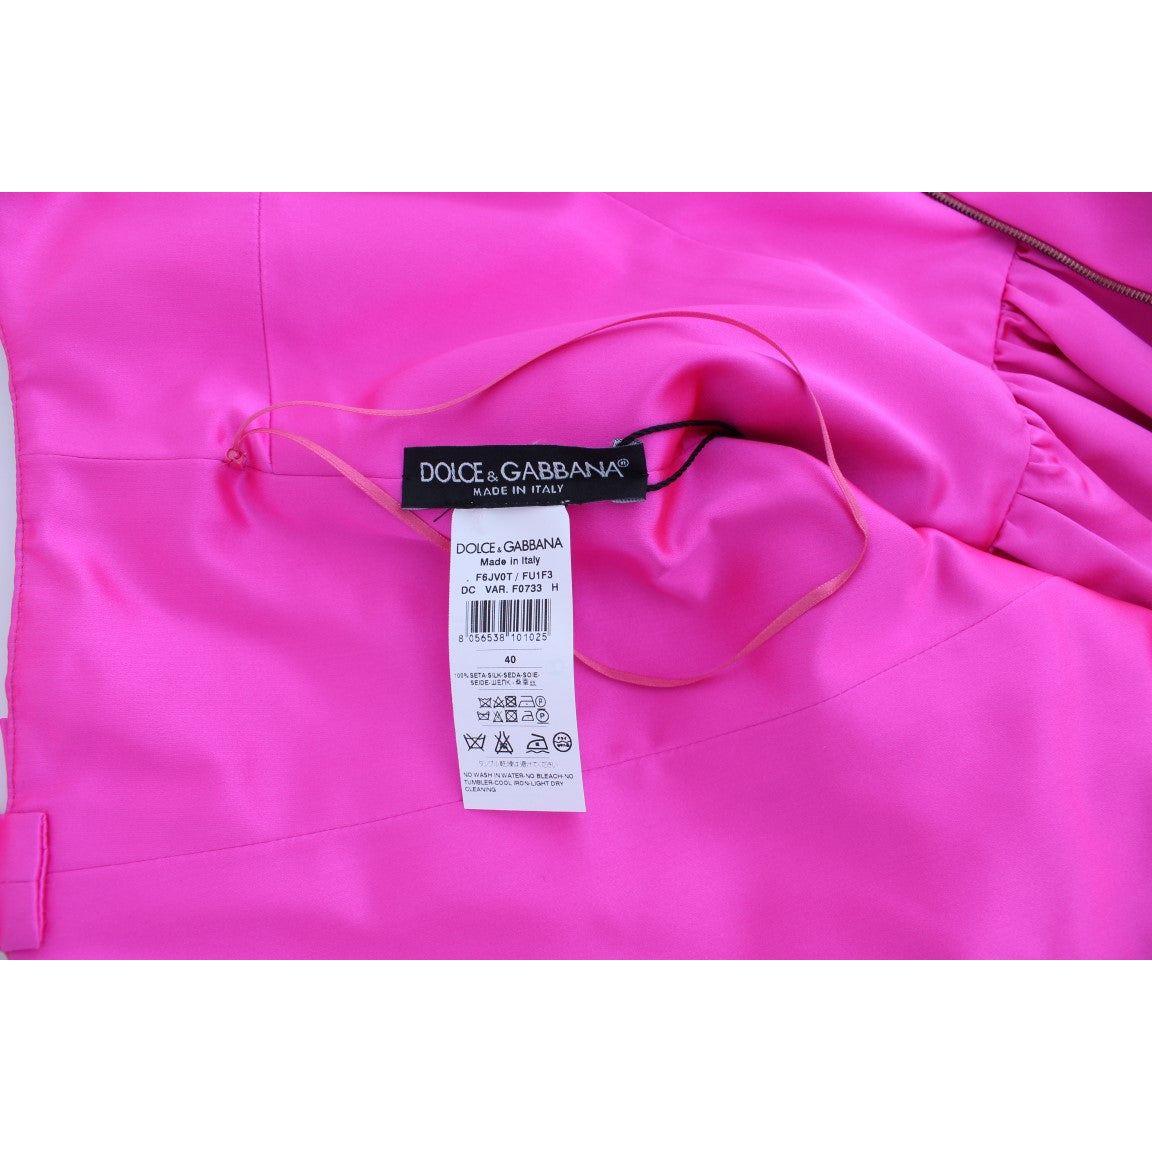 Dolce & Gabbana Elegant Silk Full Length Pink Sheath Dress pink-silk-long-sheath-ball-gown-dress 76495-pink-silk-long-sheath-ball-gown-dress-6.jpg